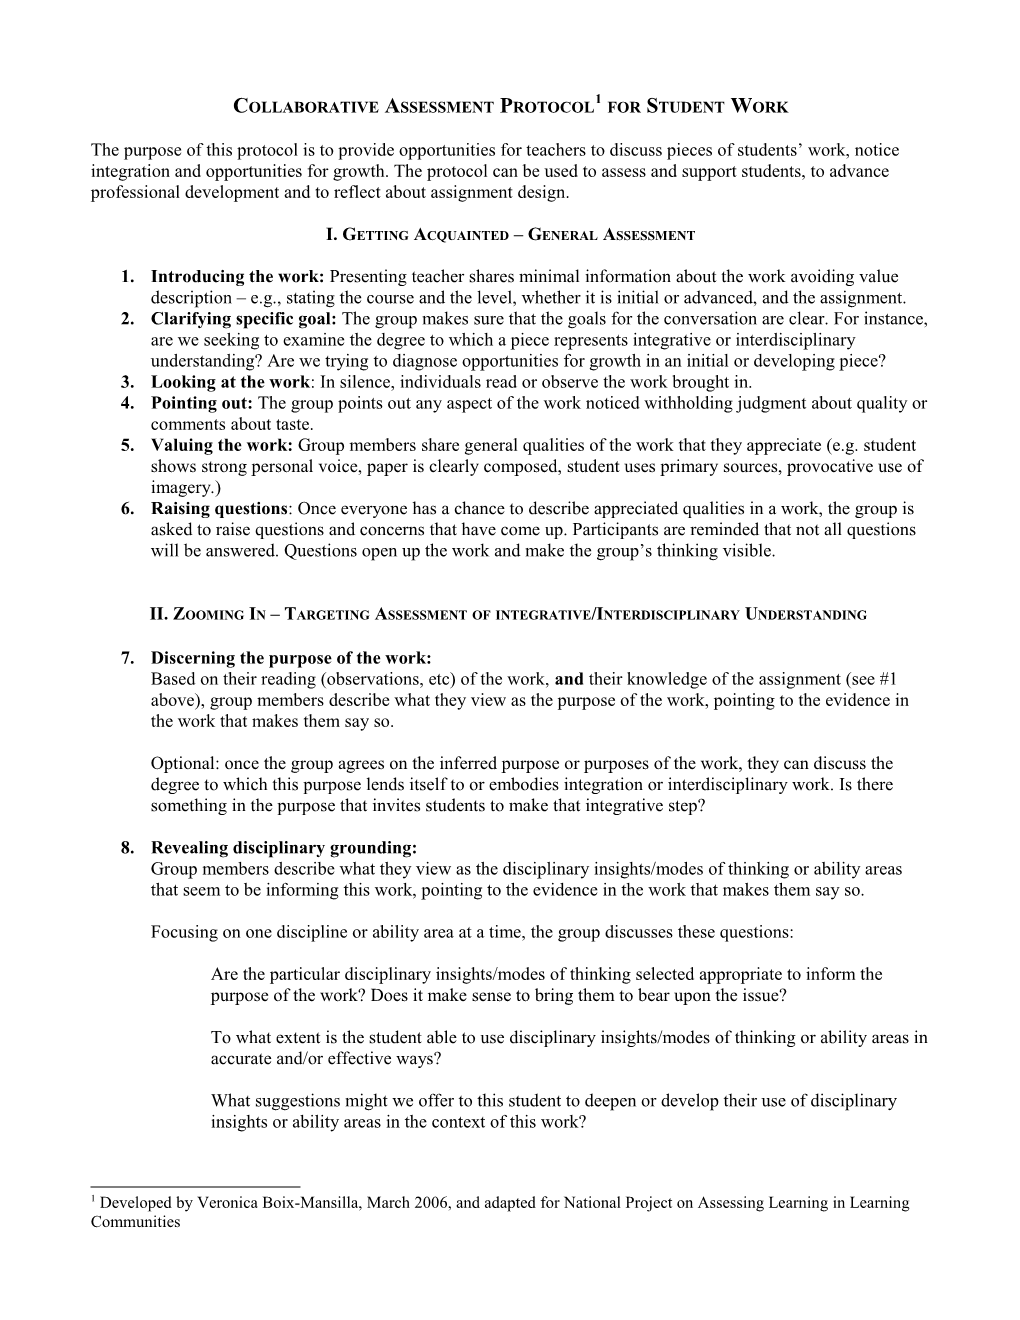 Collaborative Assessment Protocol for Interdisciplinary Student Work